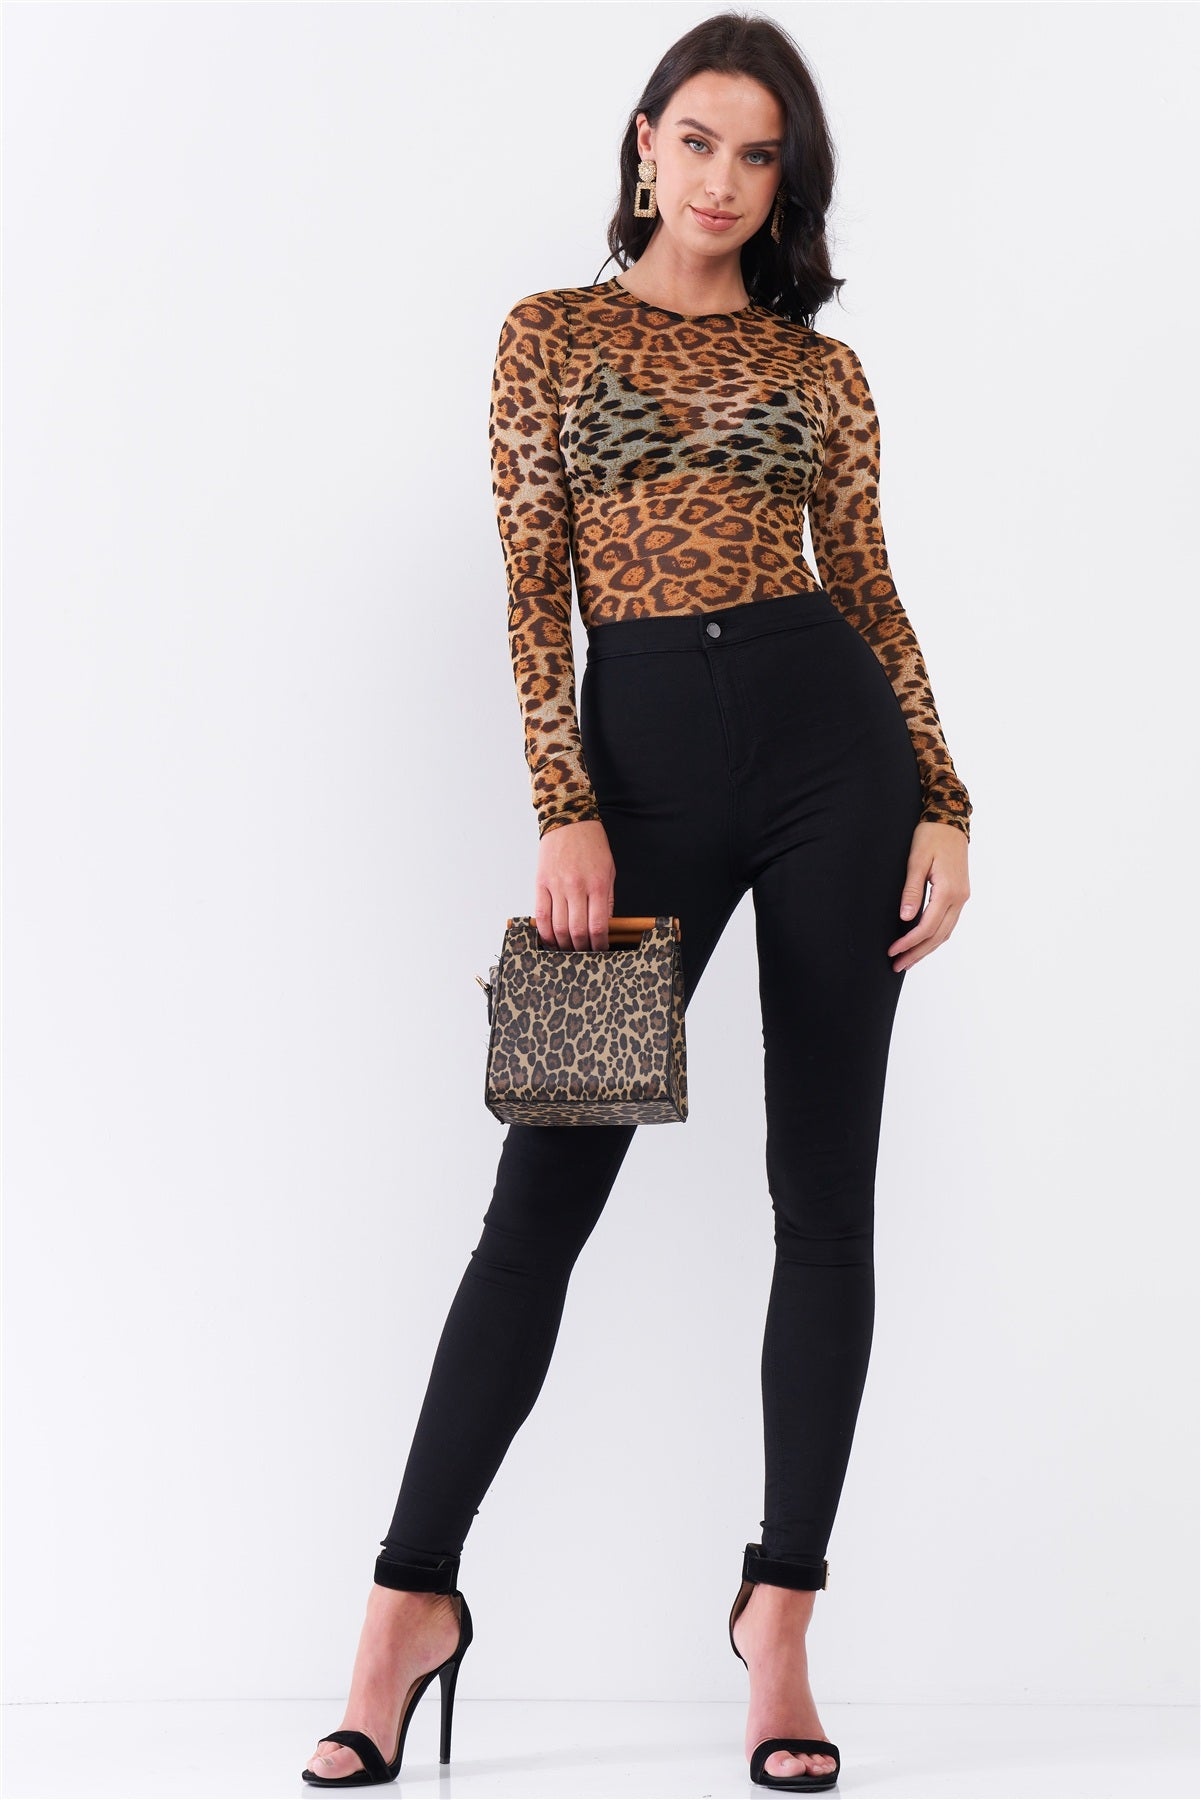 fz women's leopard print bodysuit